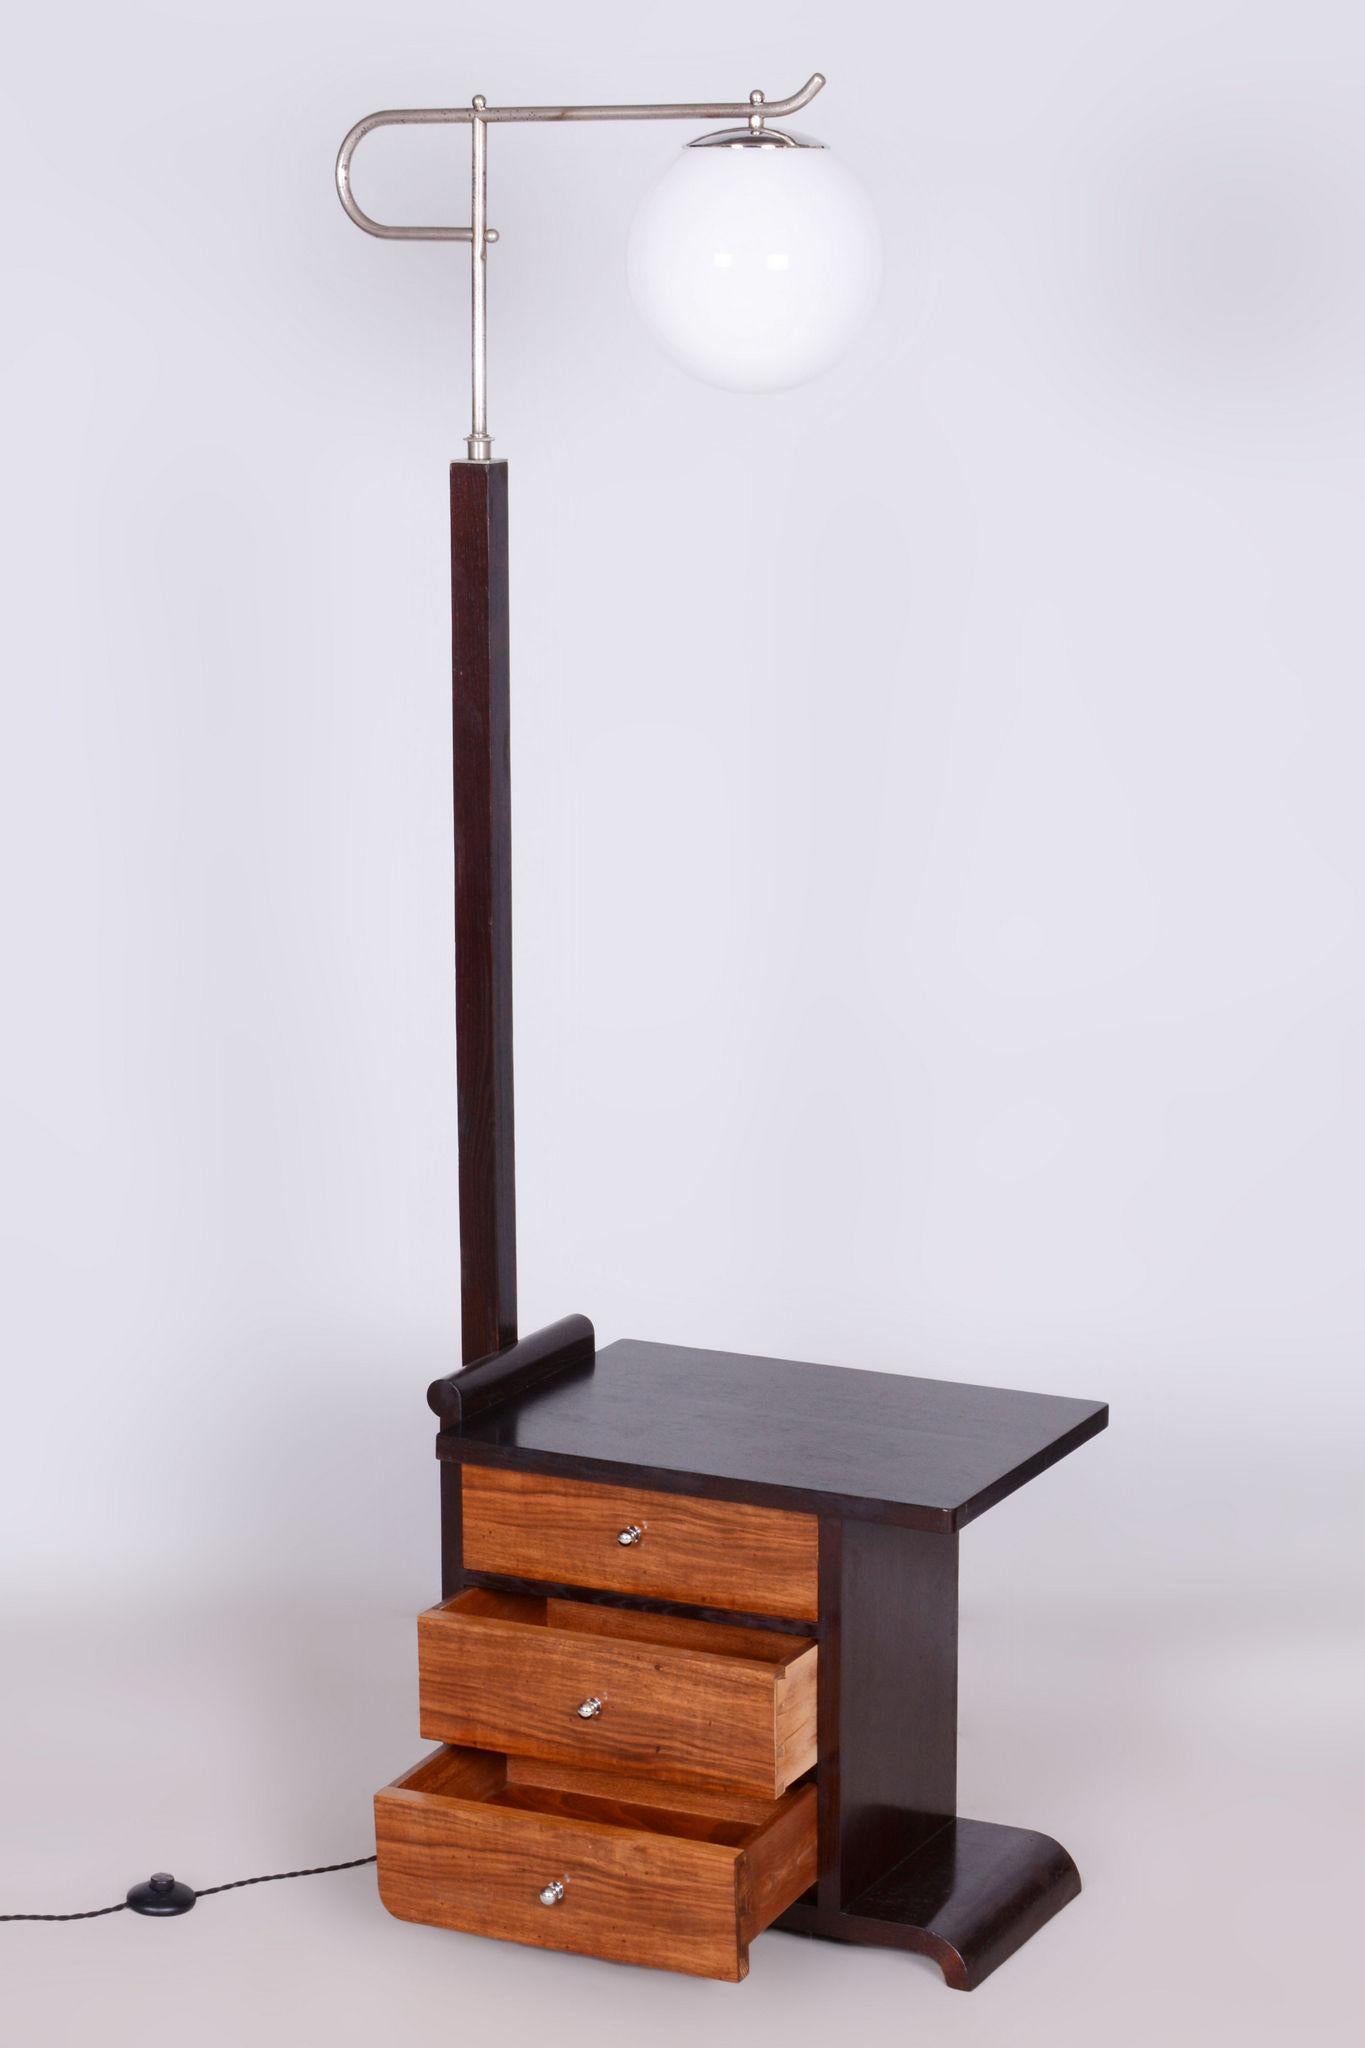 Restored ArtDeco Floor Lamp, J. Halabala, Walnut, Chrome, Glass, Czechia, 1930s For Sale 3